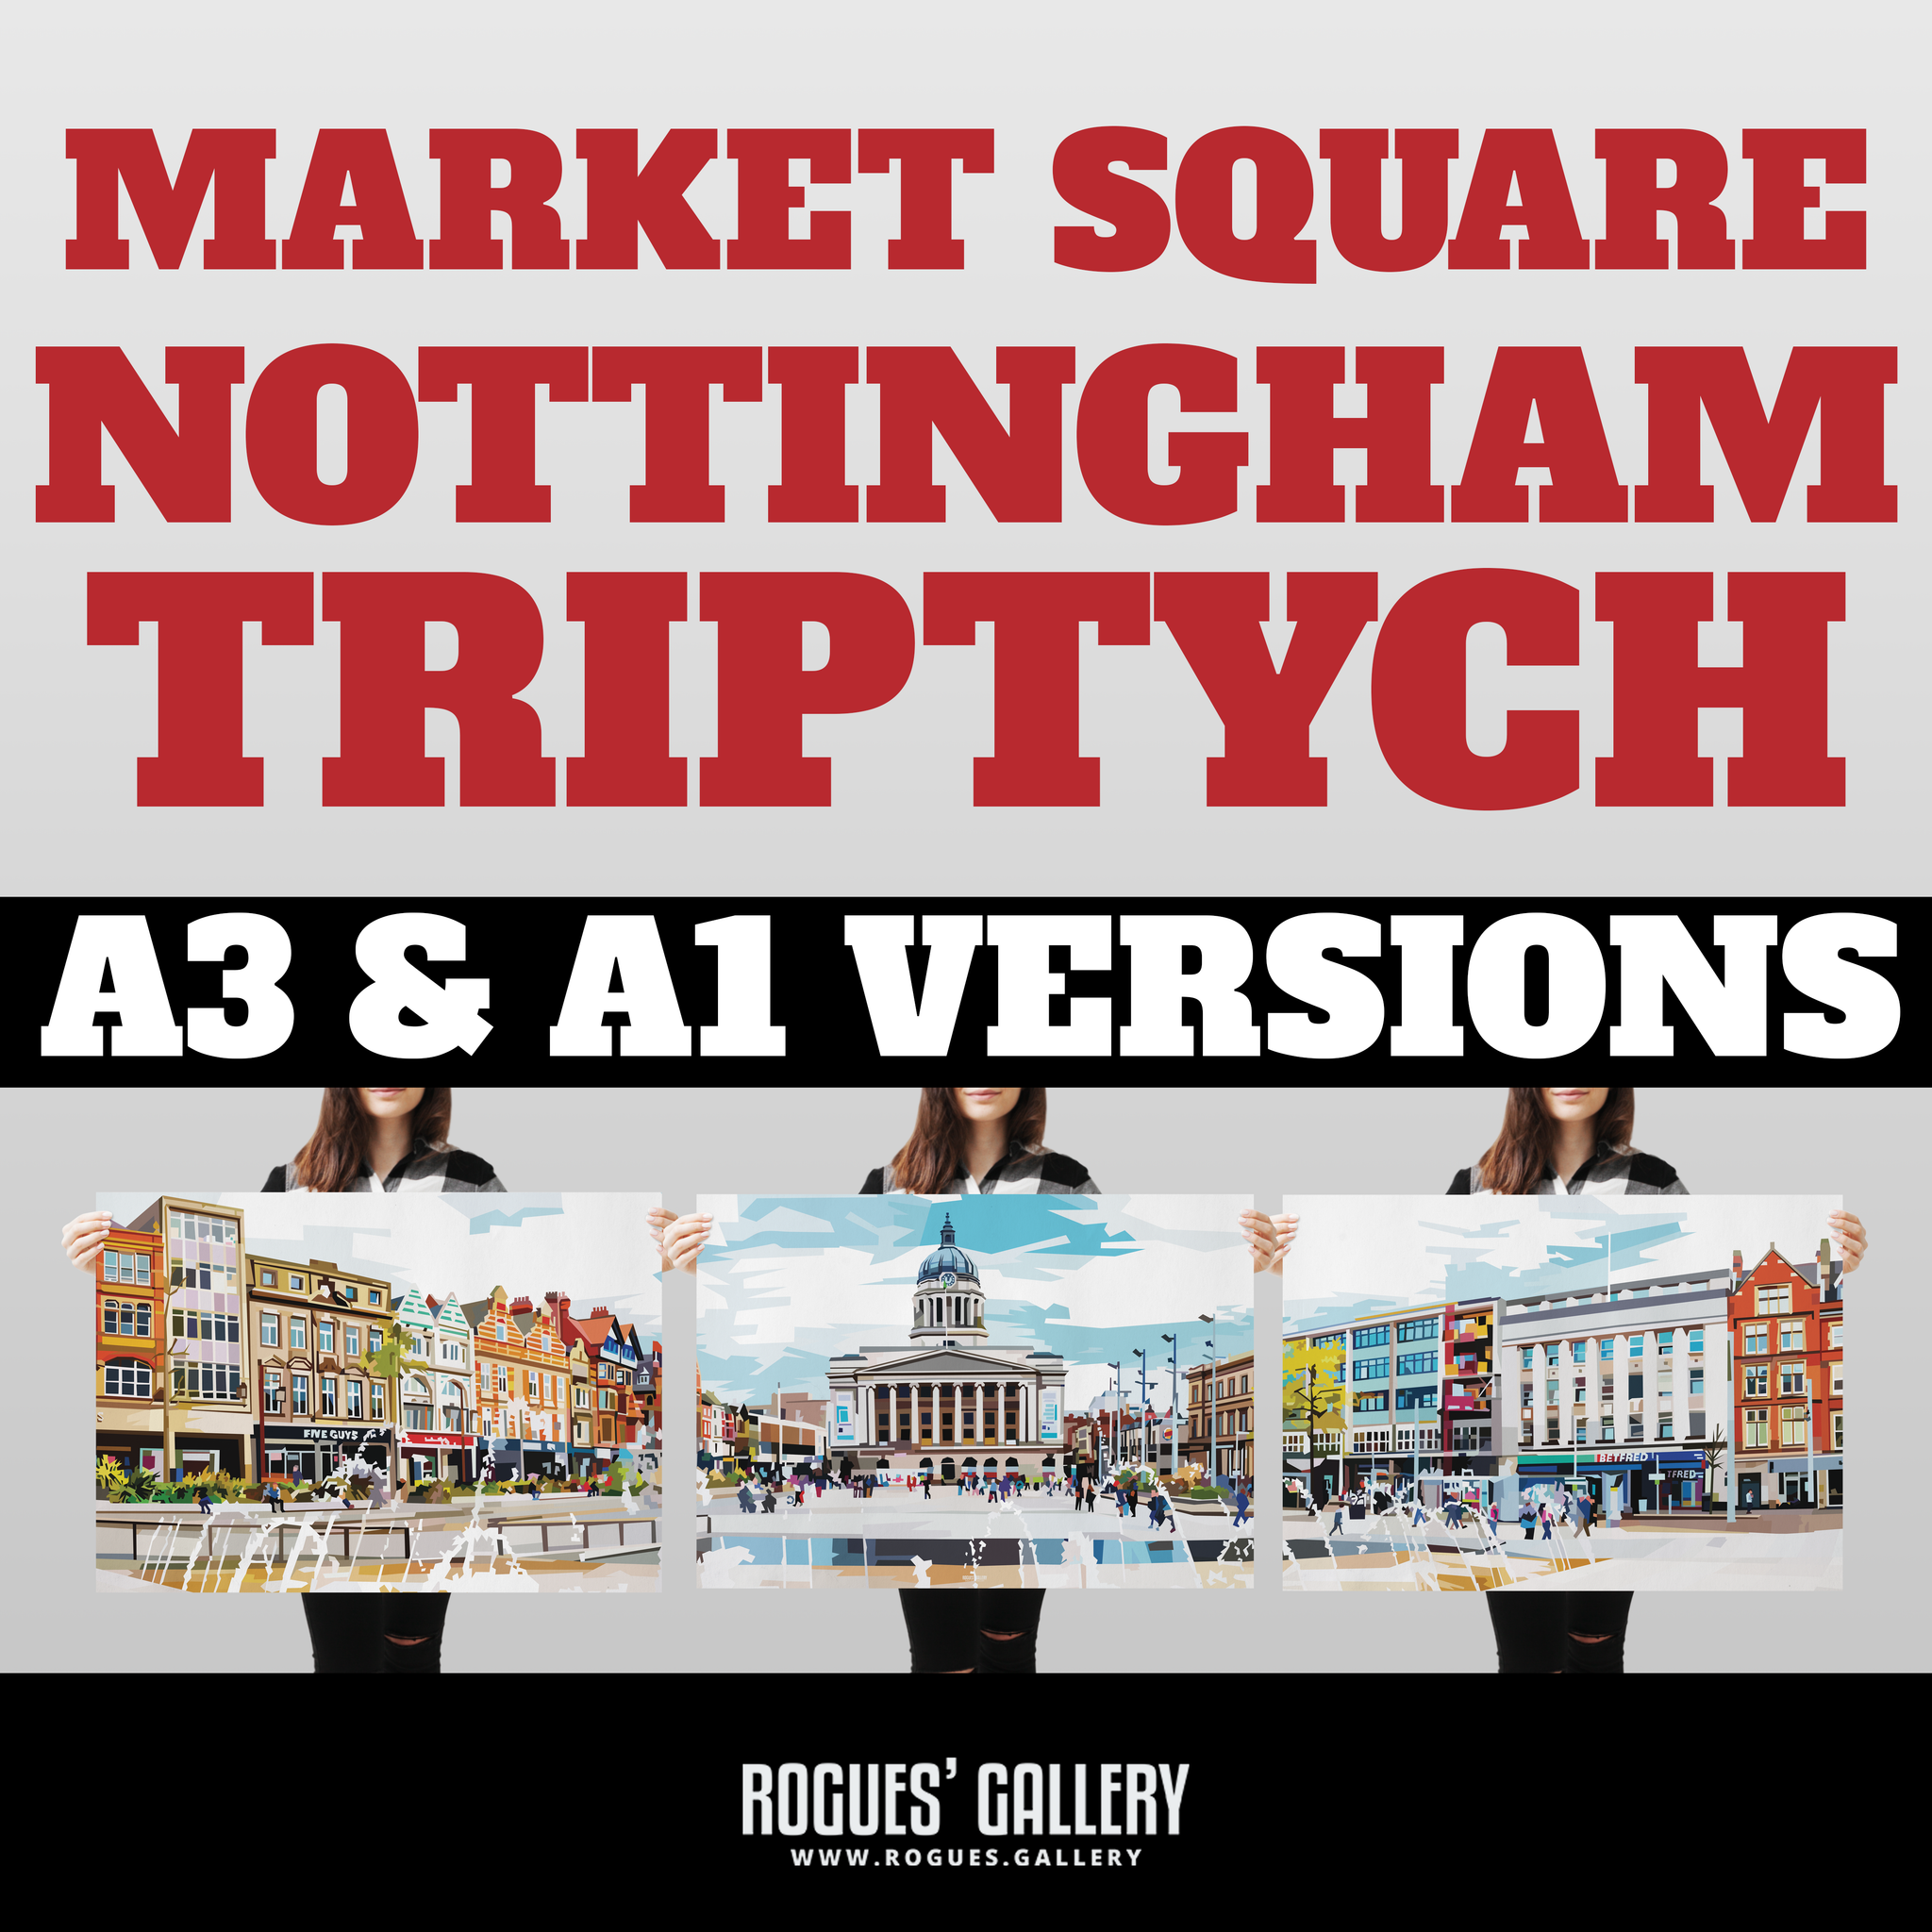 Nottingham Market Square modern art triptych design art A3 A1 